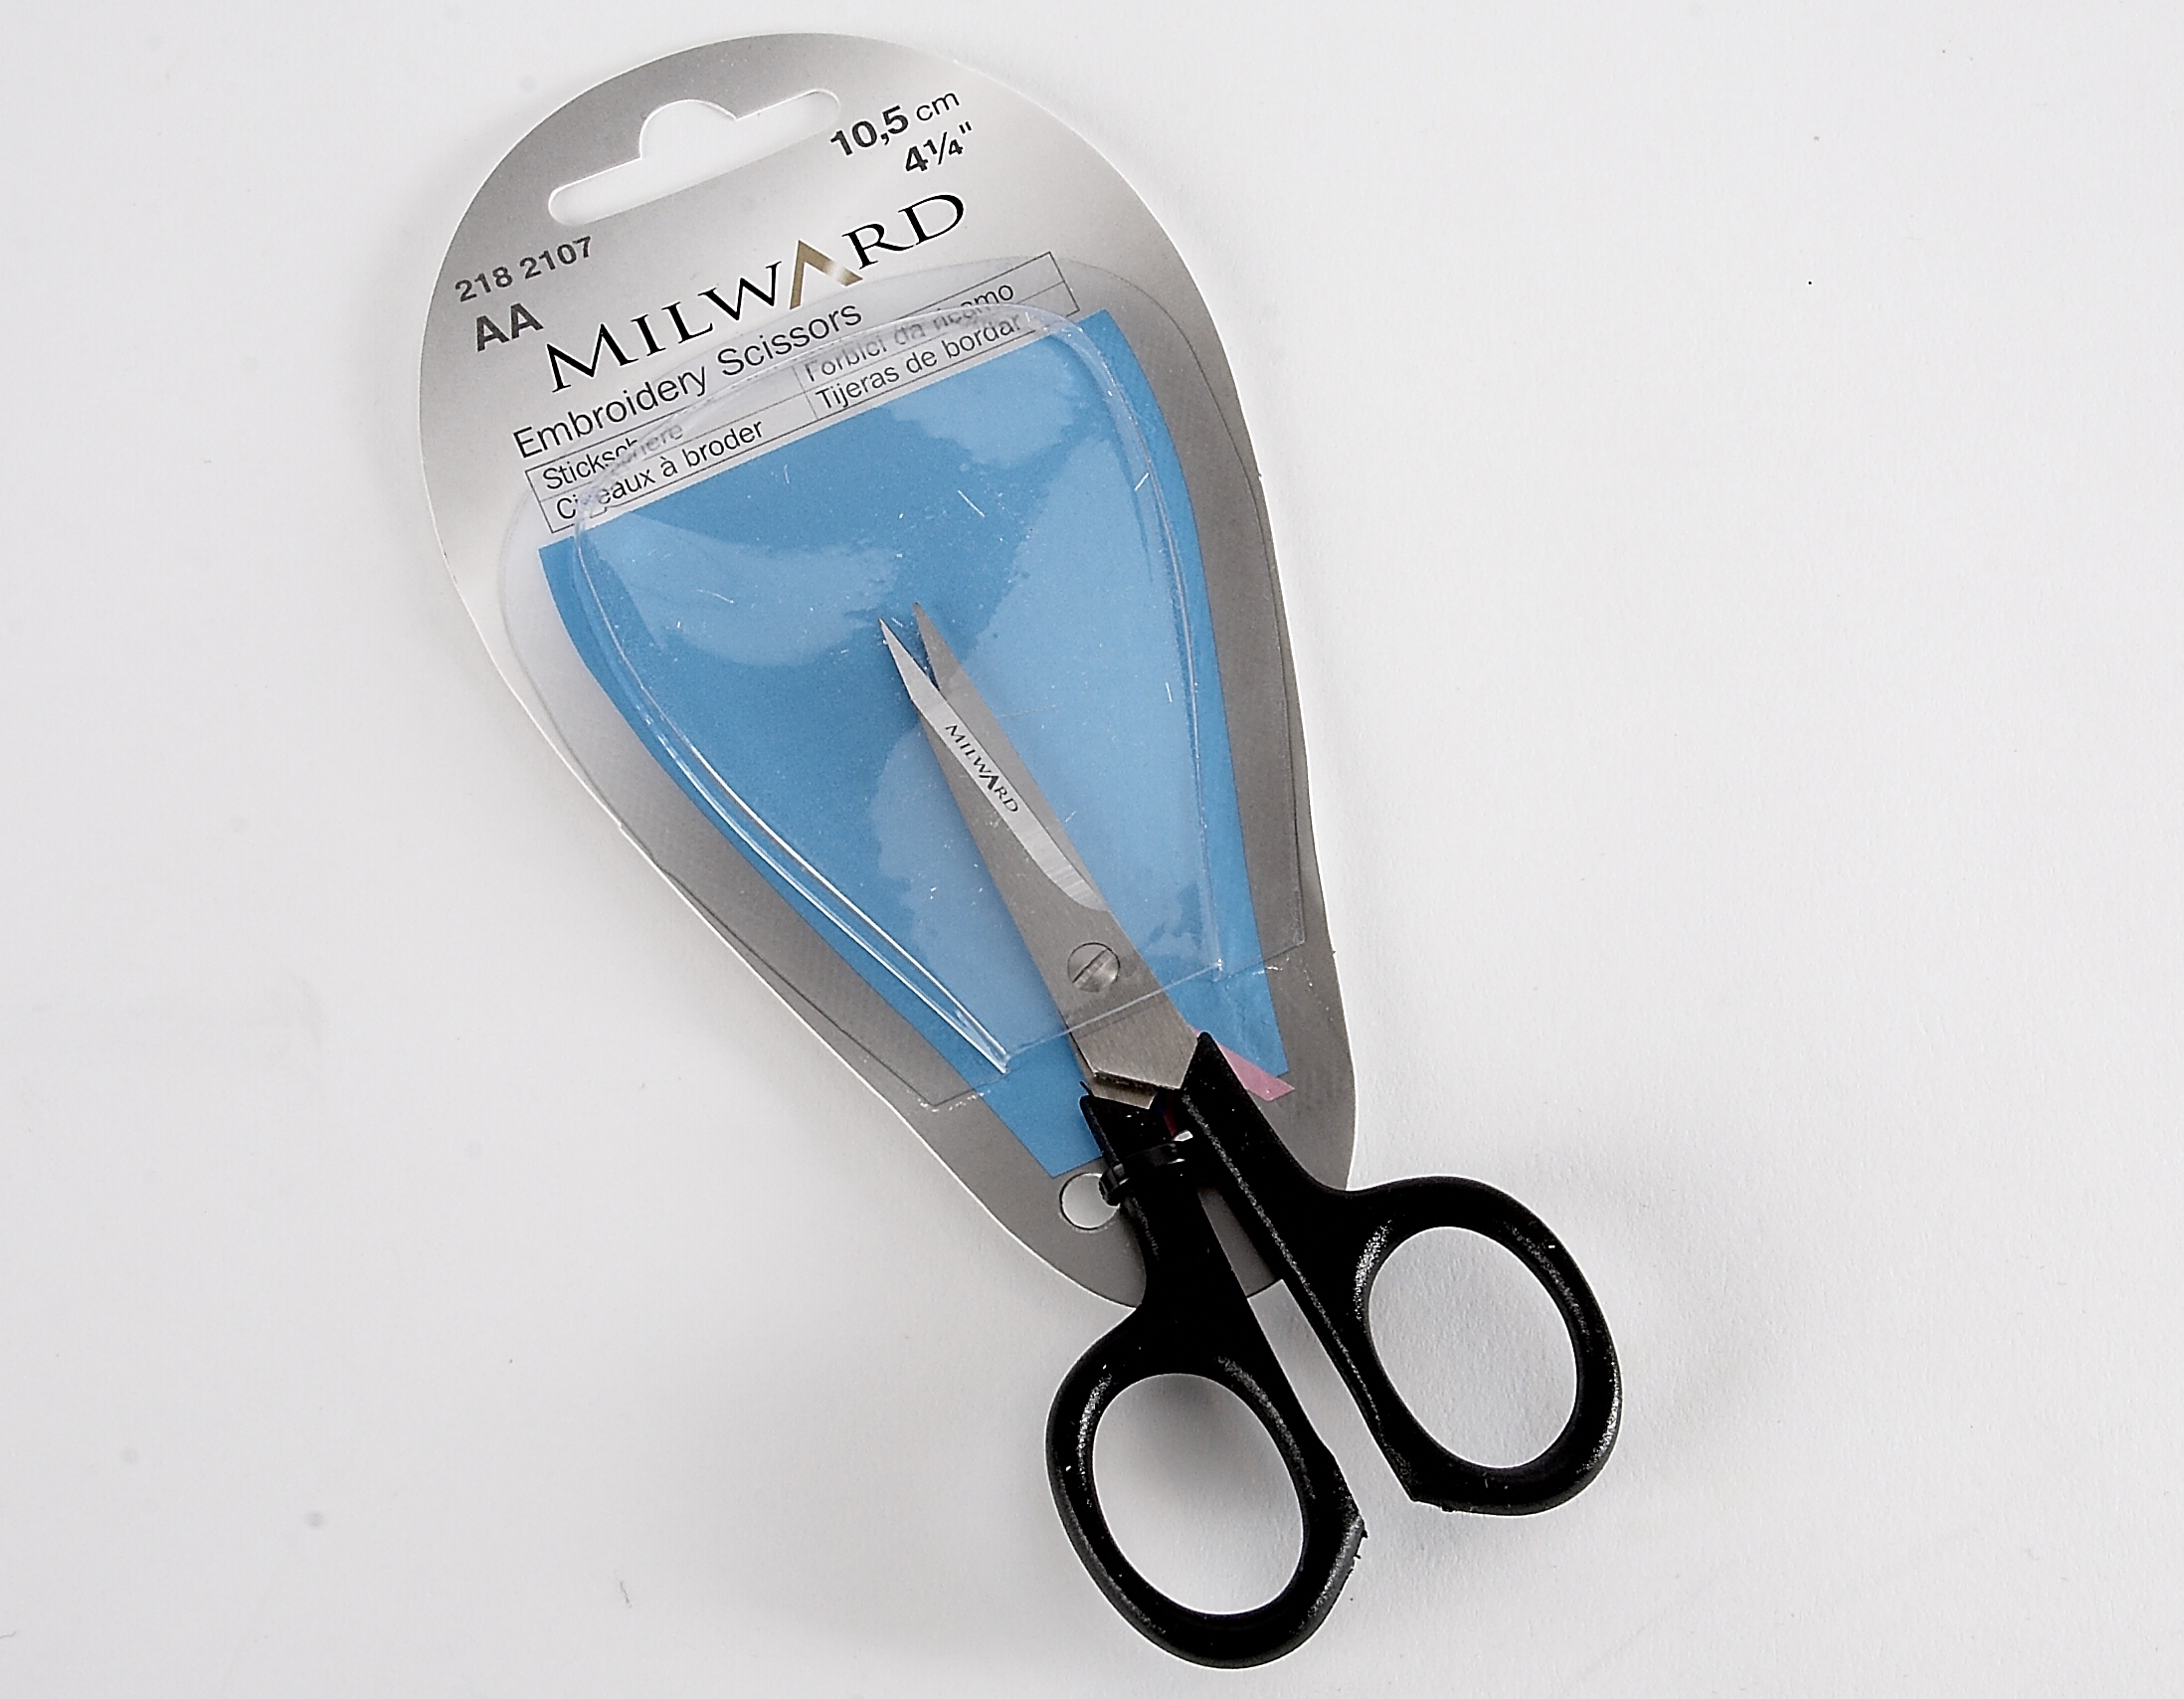 Milward Embroidery scissors